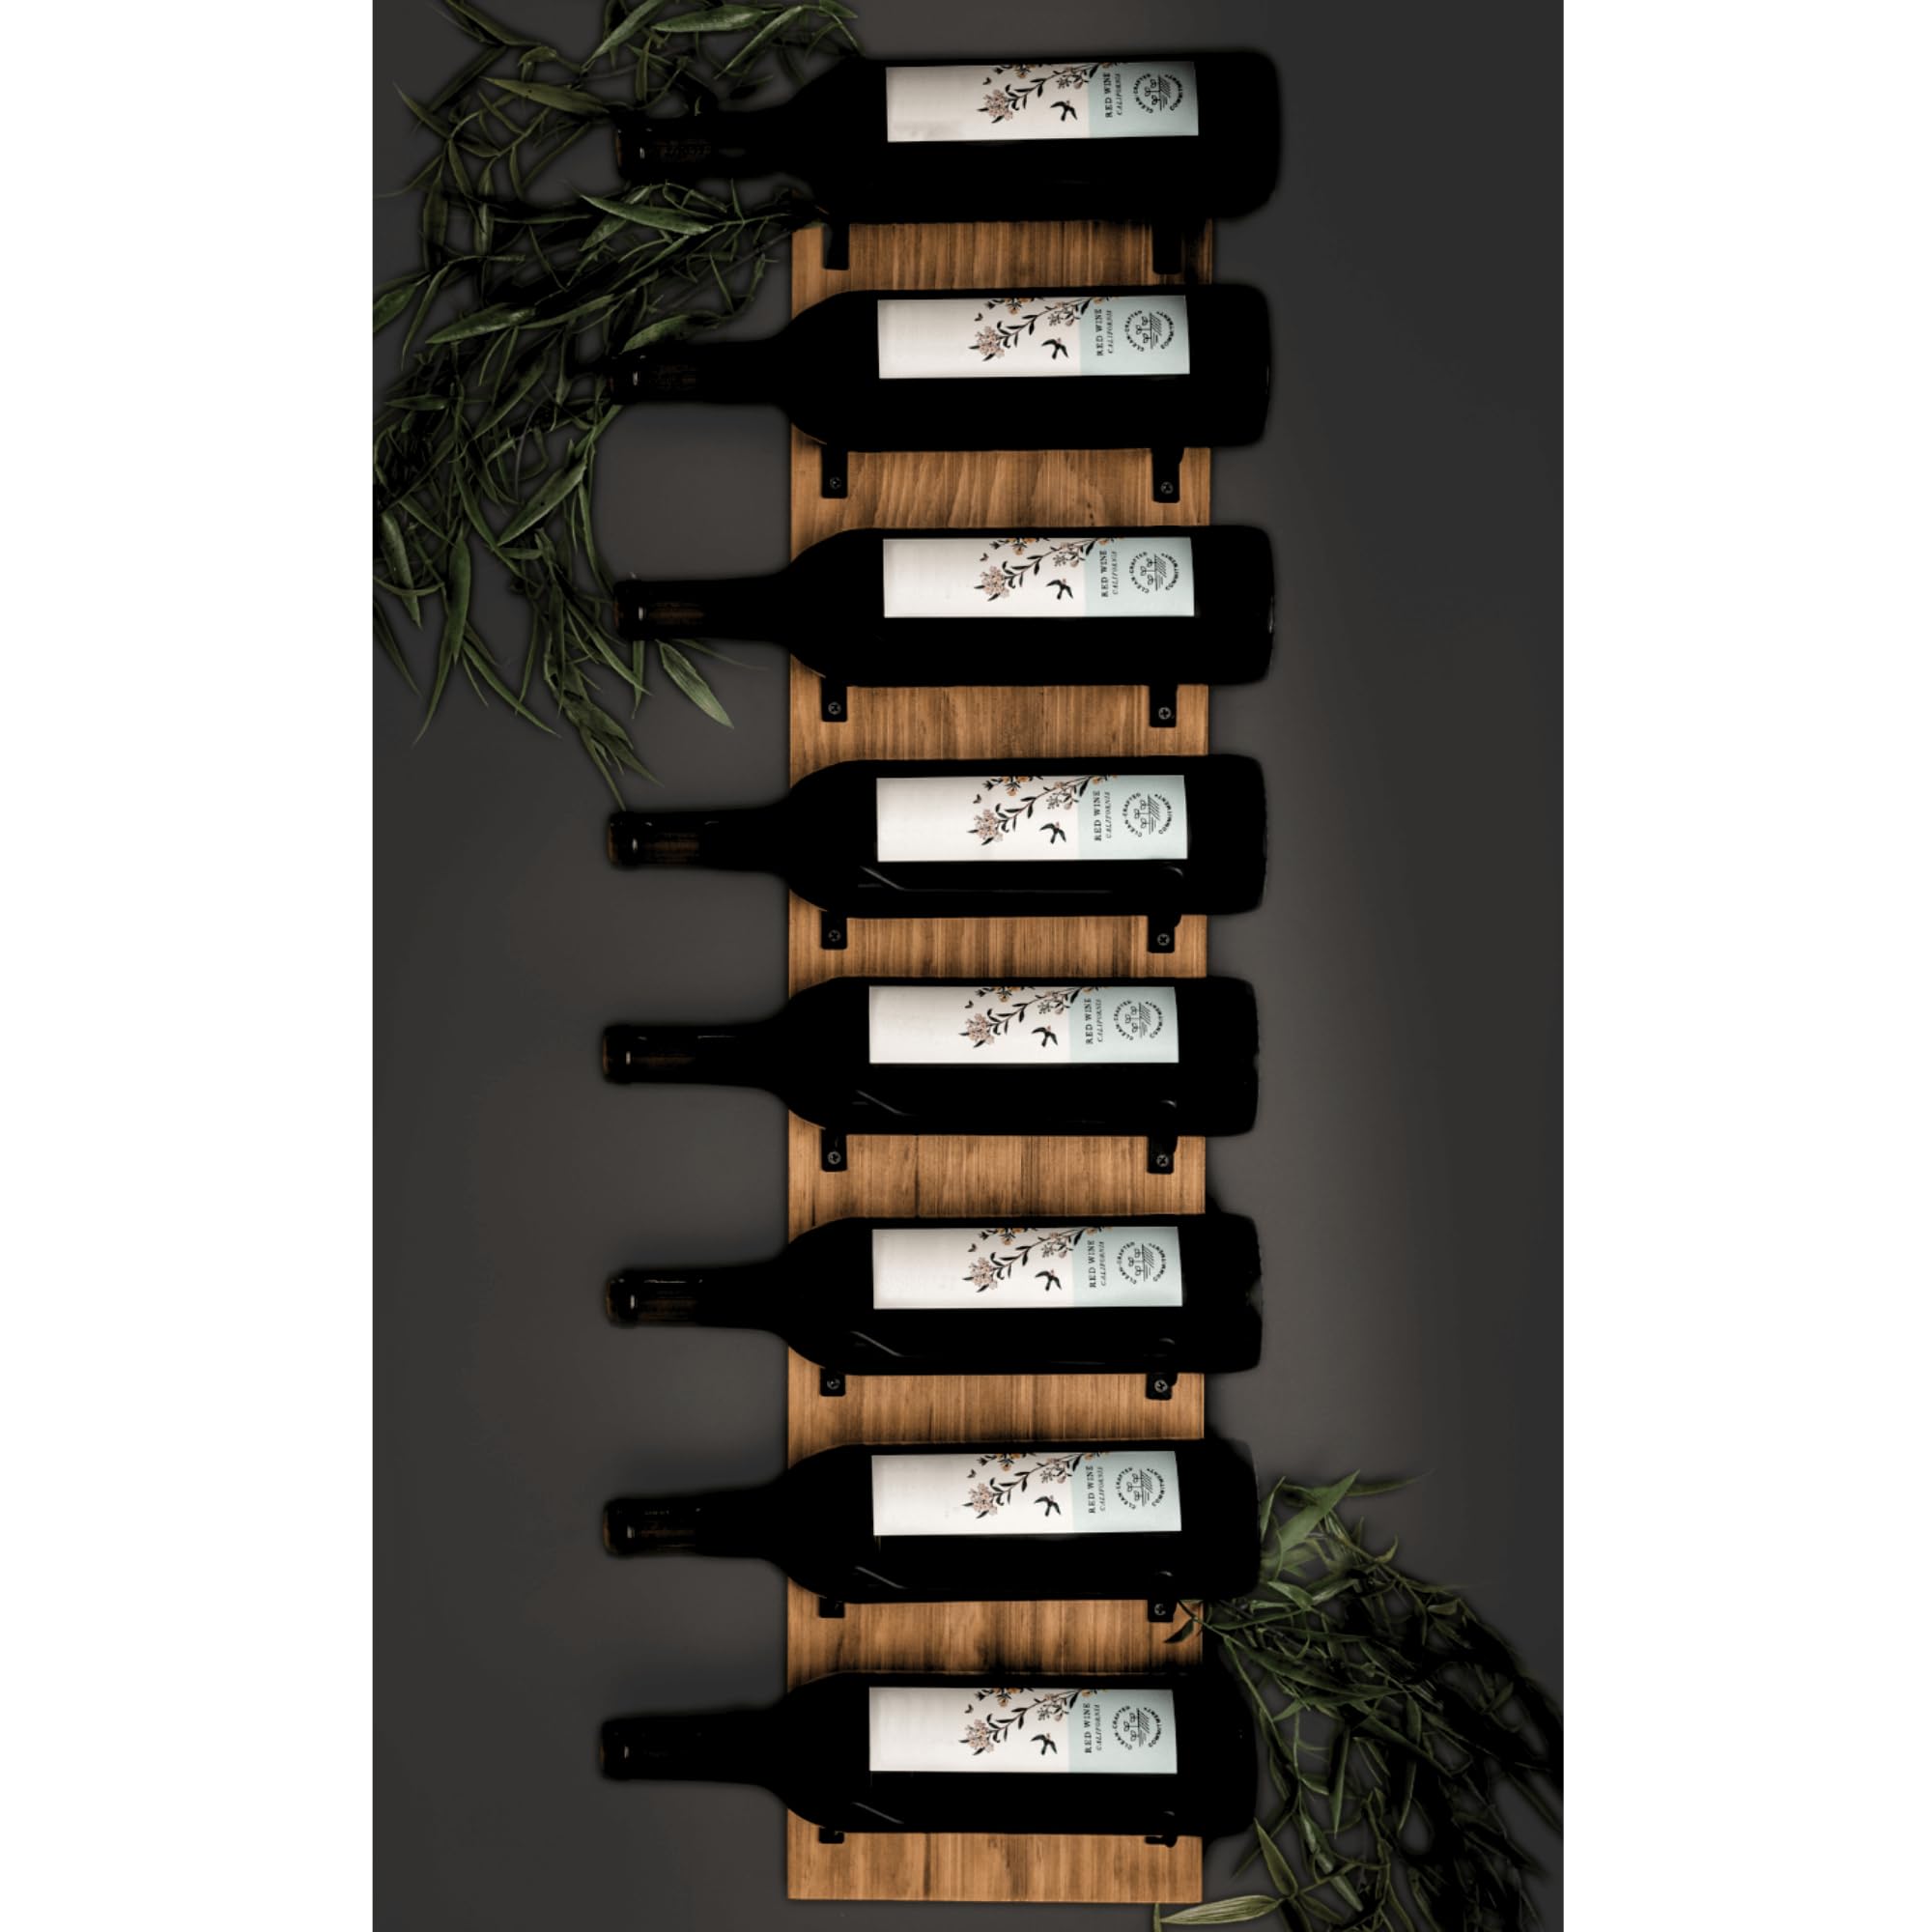 Blue River Goods Wine Rack Wall Mounted | 8 Bottle Storage | Wooden Wine Rack for Wall Wine Rack Display | Wall Mount Wine Rack with Black Brackets | Wall-Mounted Wine Racks | Wall Mounted Wine Racks